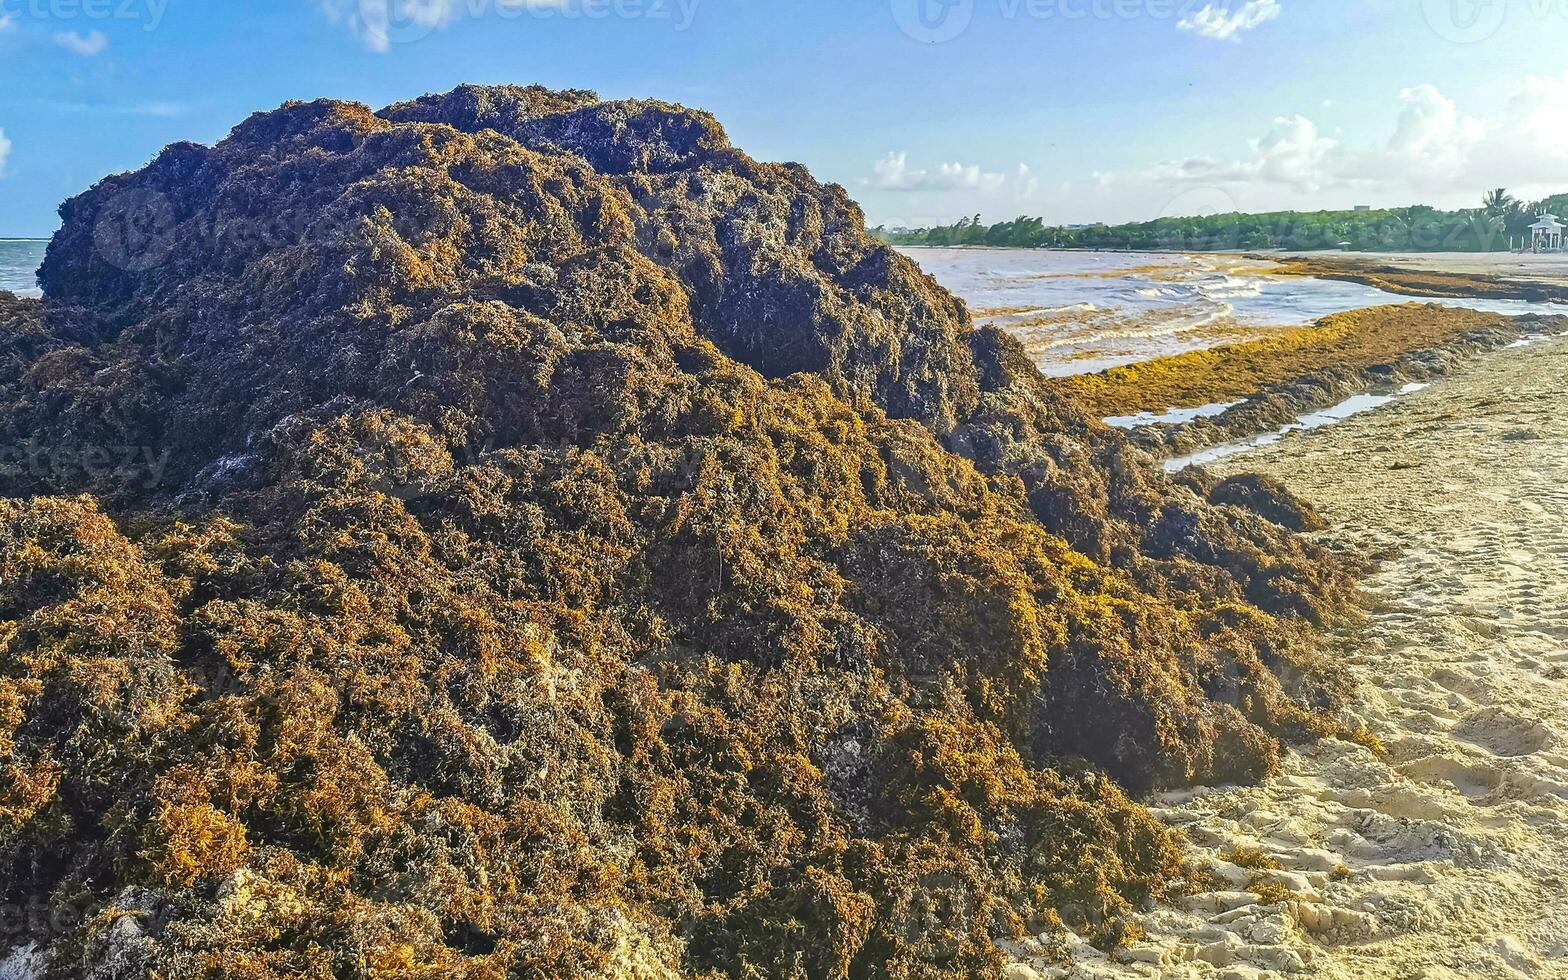 hermosa playa caribeña totalmente sucia sucio asqueroso problema de algas mexico. foto